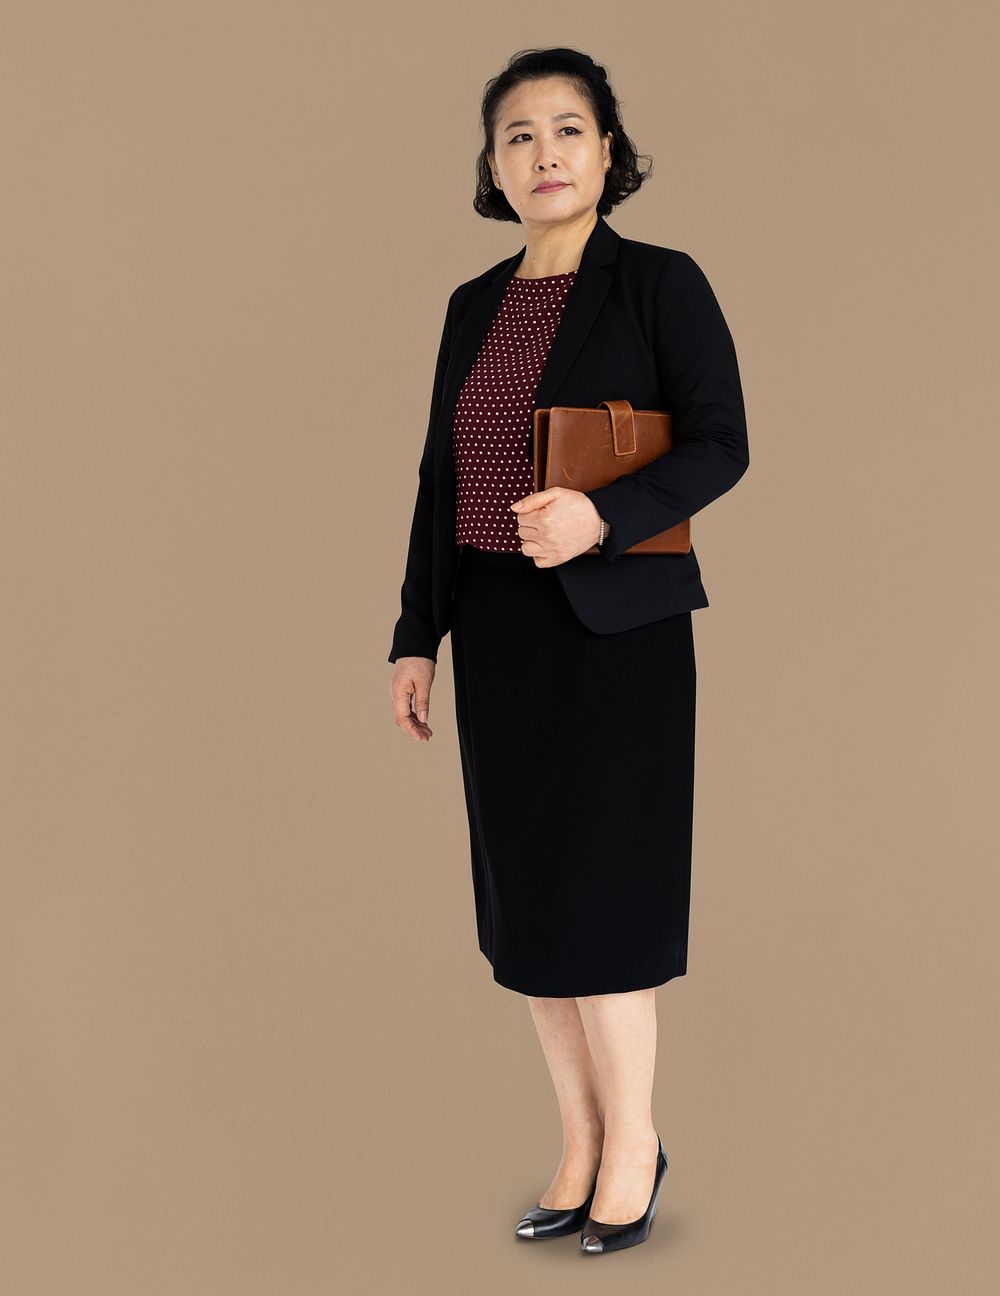 Asian Lady Posture Professional